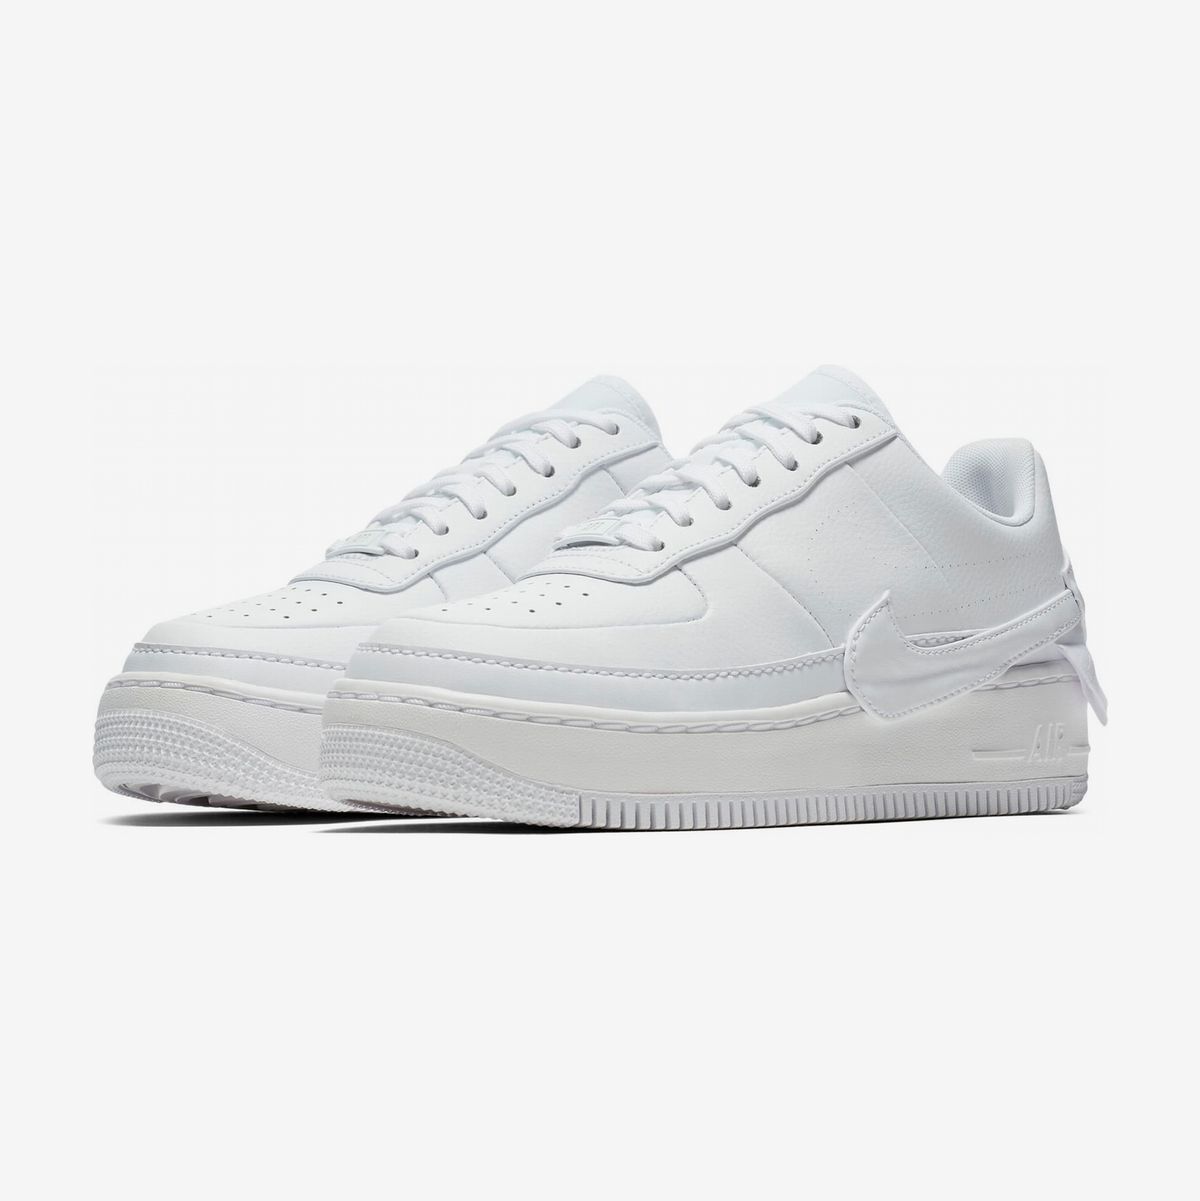 white leather platform tennis shoes